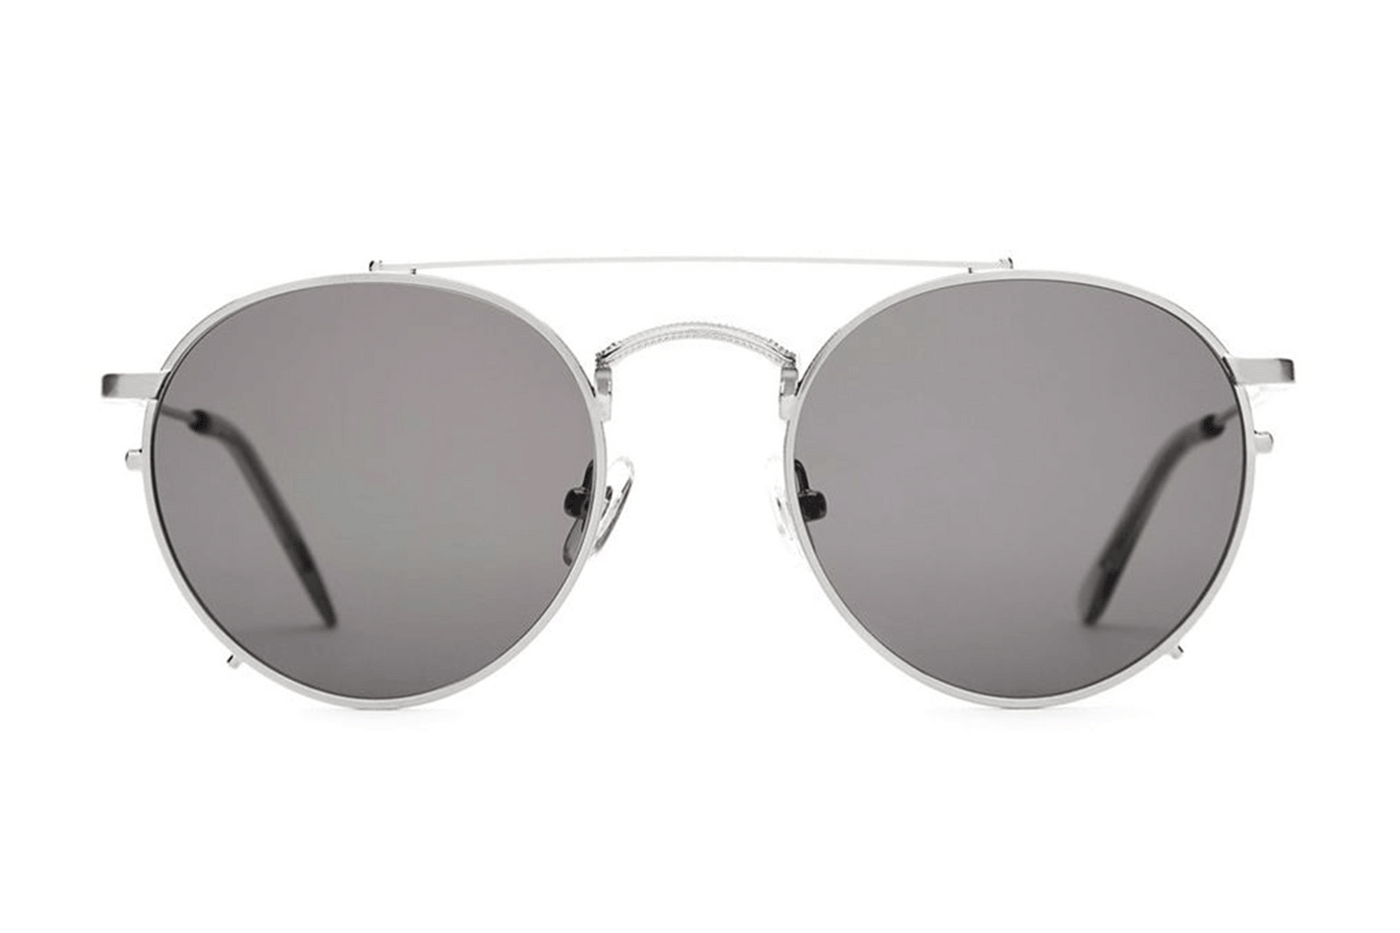 The Tuff Safari Sunglasses | Modern, Stylish Aviators – Woodzee